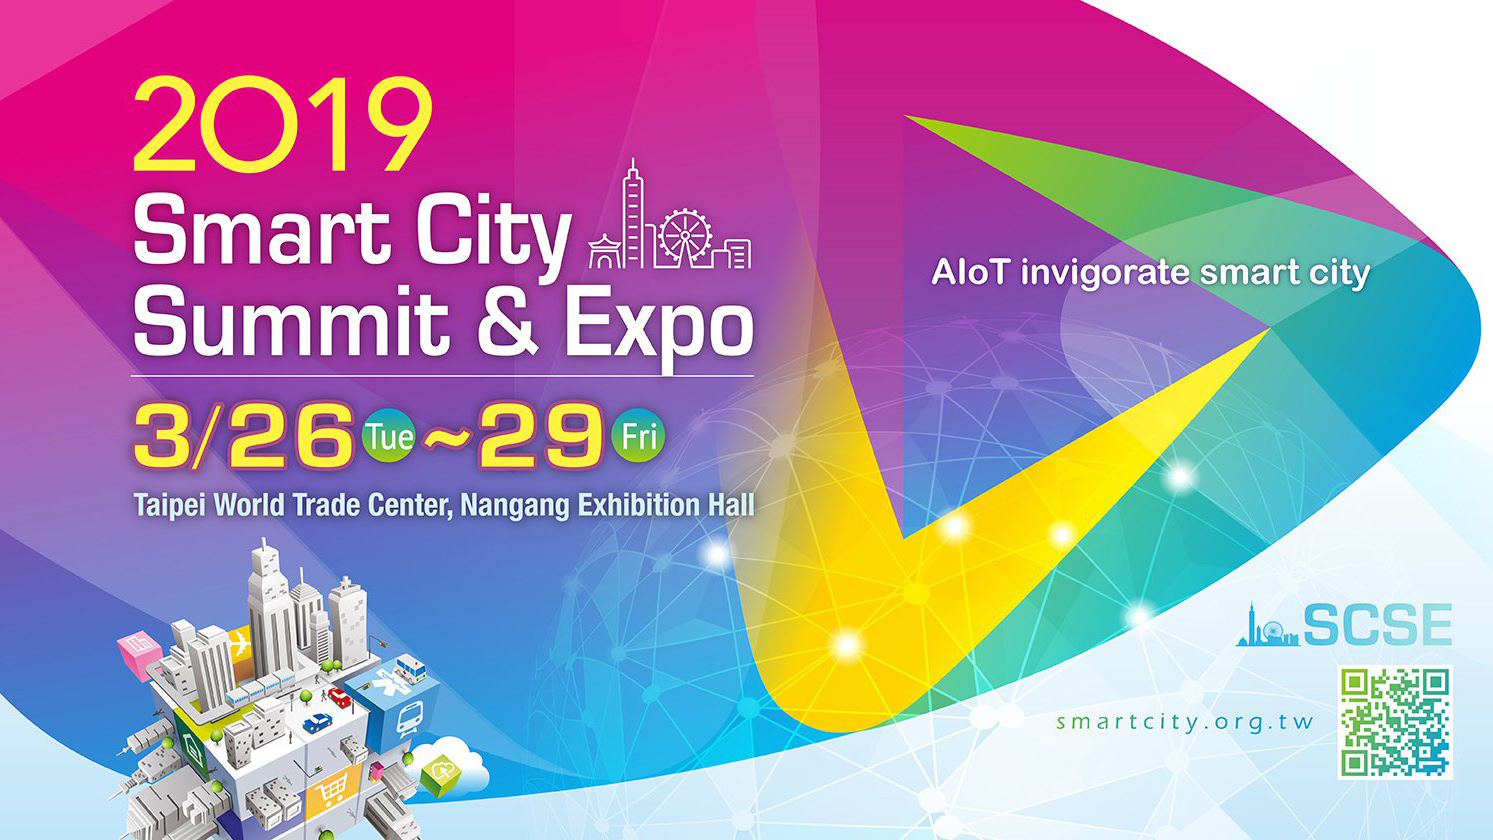 scse 2019 เยี่ยมชมบูธ Smart Healthcare Expo กับเทคโนโลยีระบบการแพทย์และการดูแลสุขภาพอัจฉริยะในงาน 2019 SMART CITY SUMMIT & EXPO ณ กรุงไทเป ประเทศไต้หวัน 